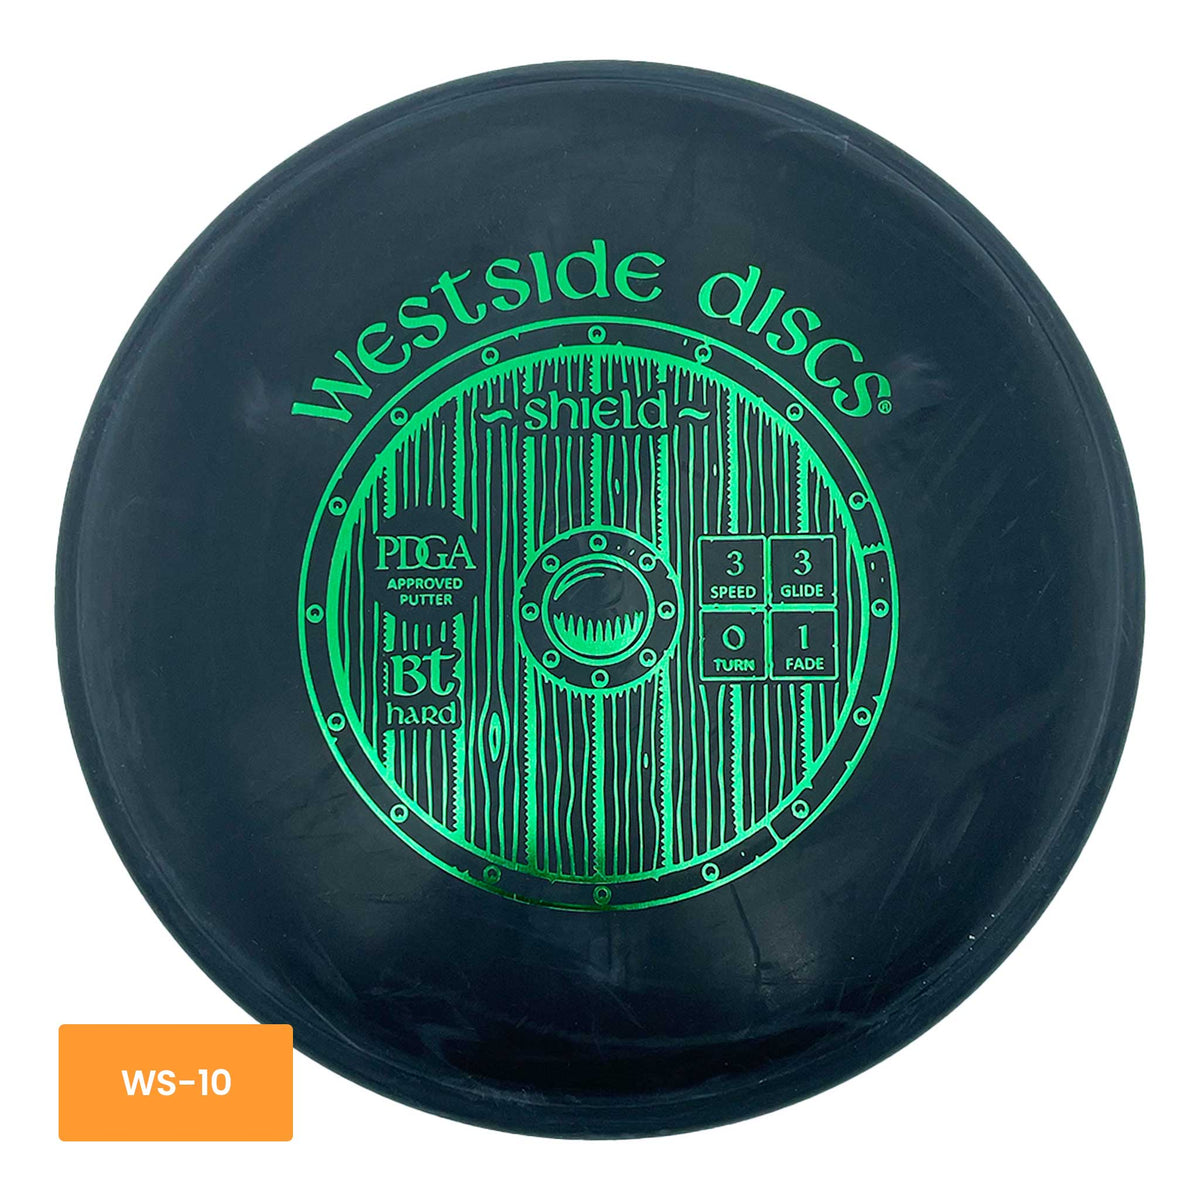 Westside Discs BT Hard Shield putter and approach - Grey